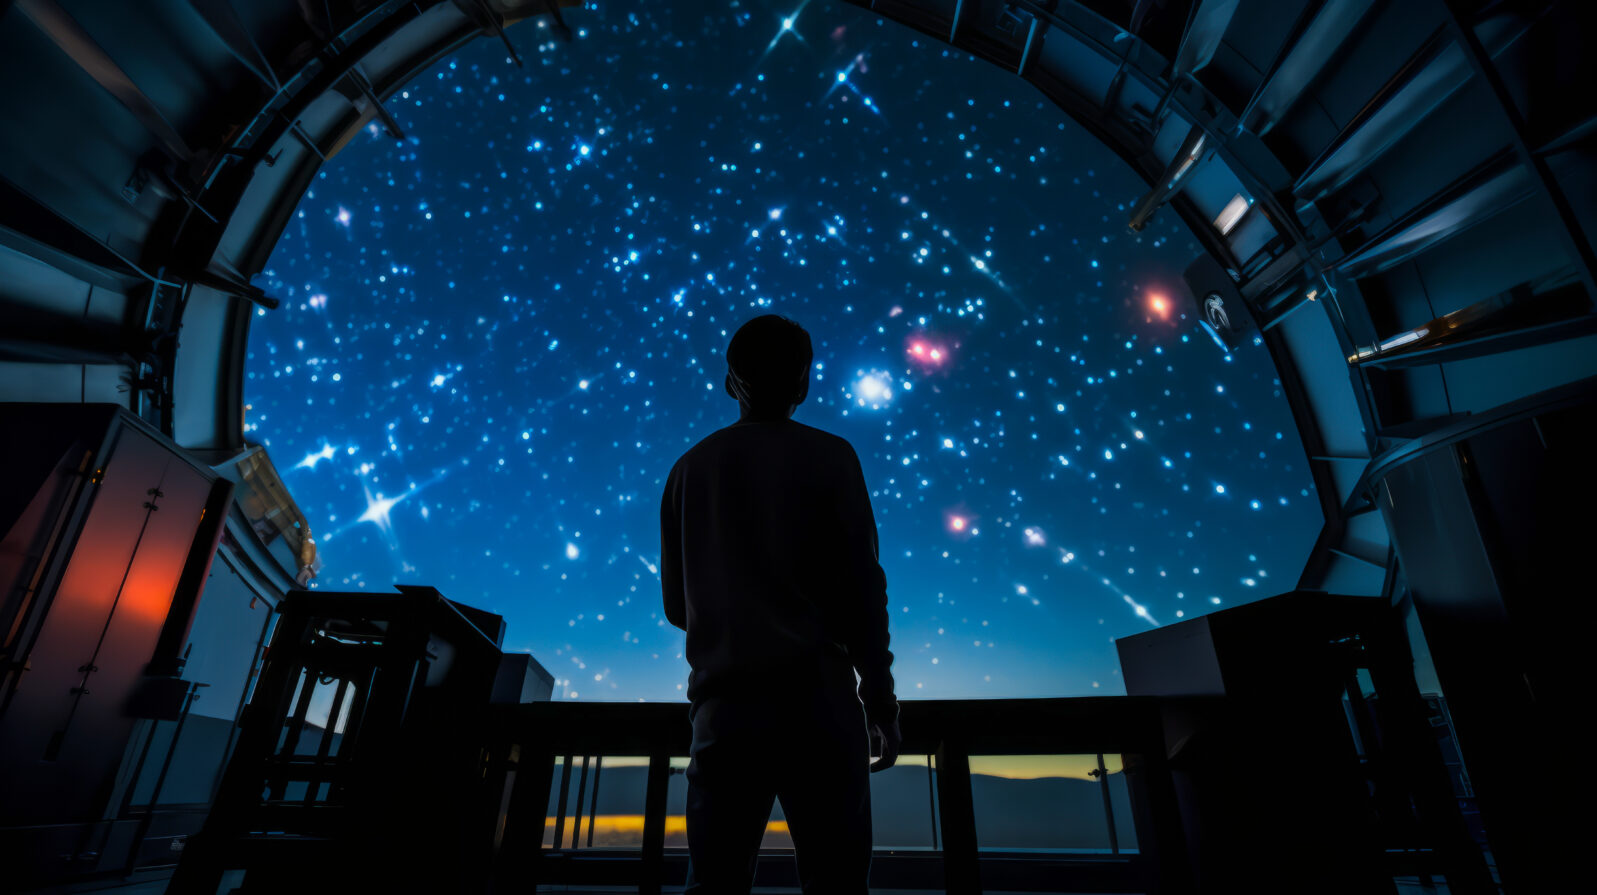 Scientist studying stars through large telescope, cosmology